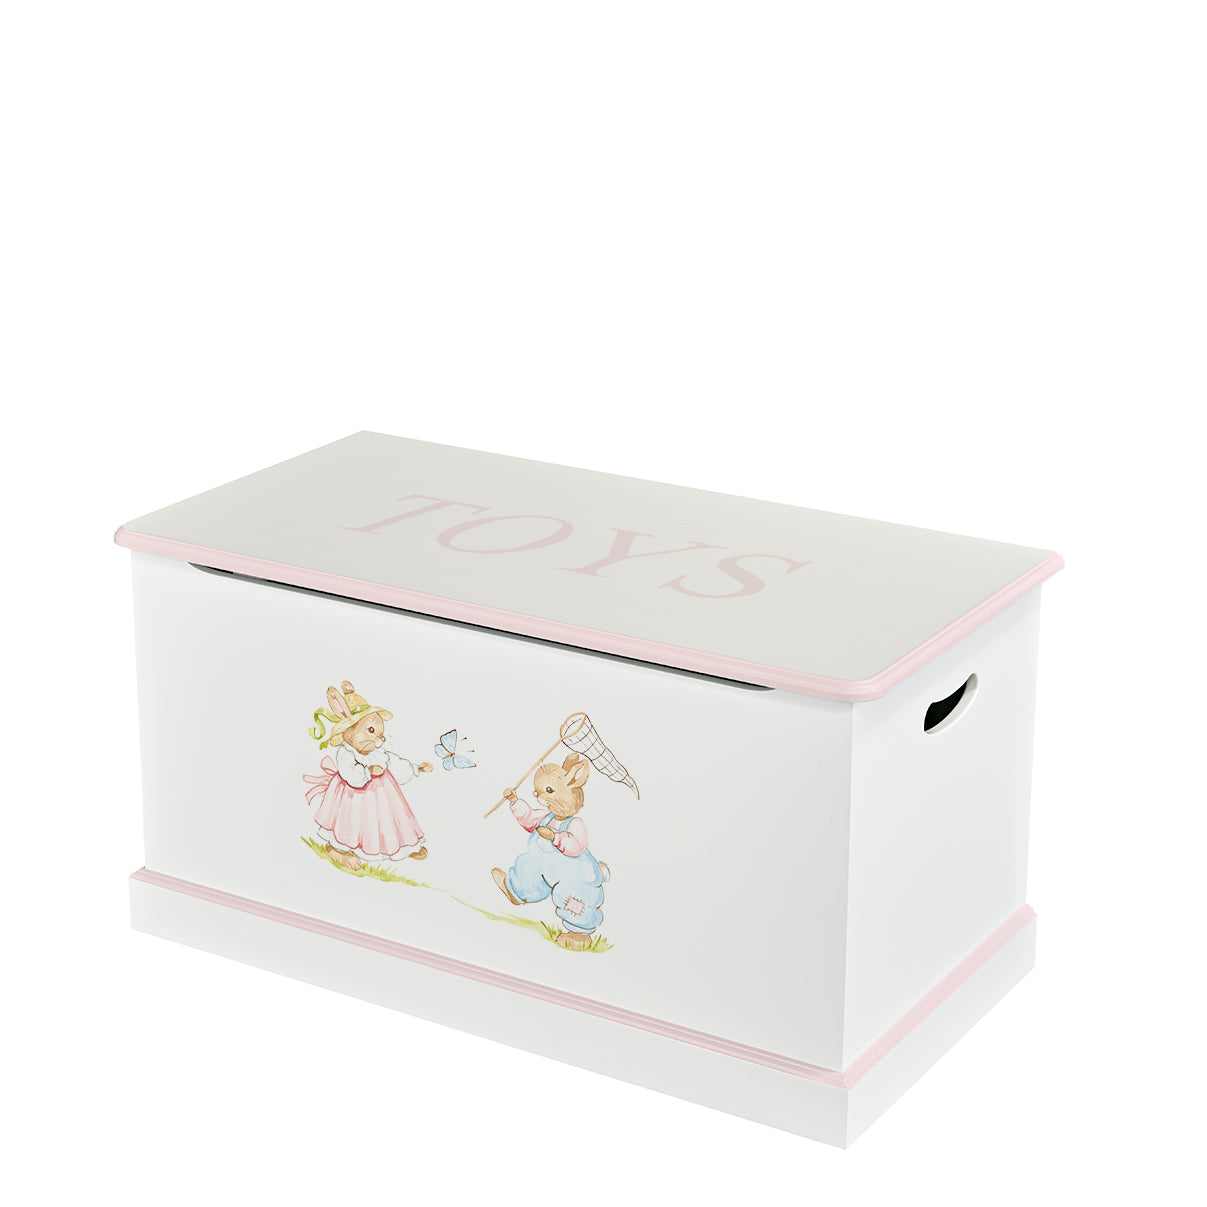 Cambridge Toy box - Barbara's Bunnies with Dragons Pink Trim